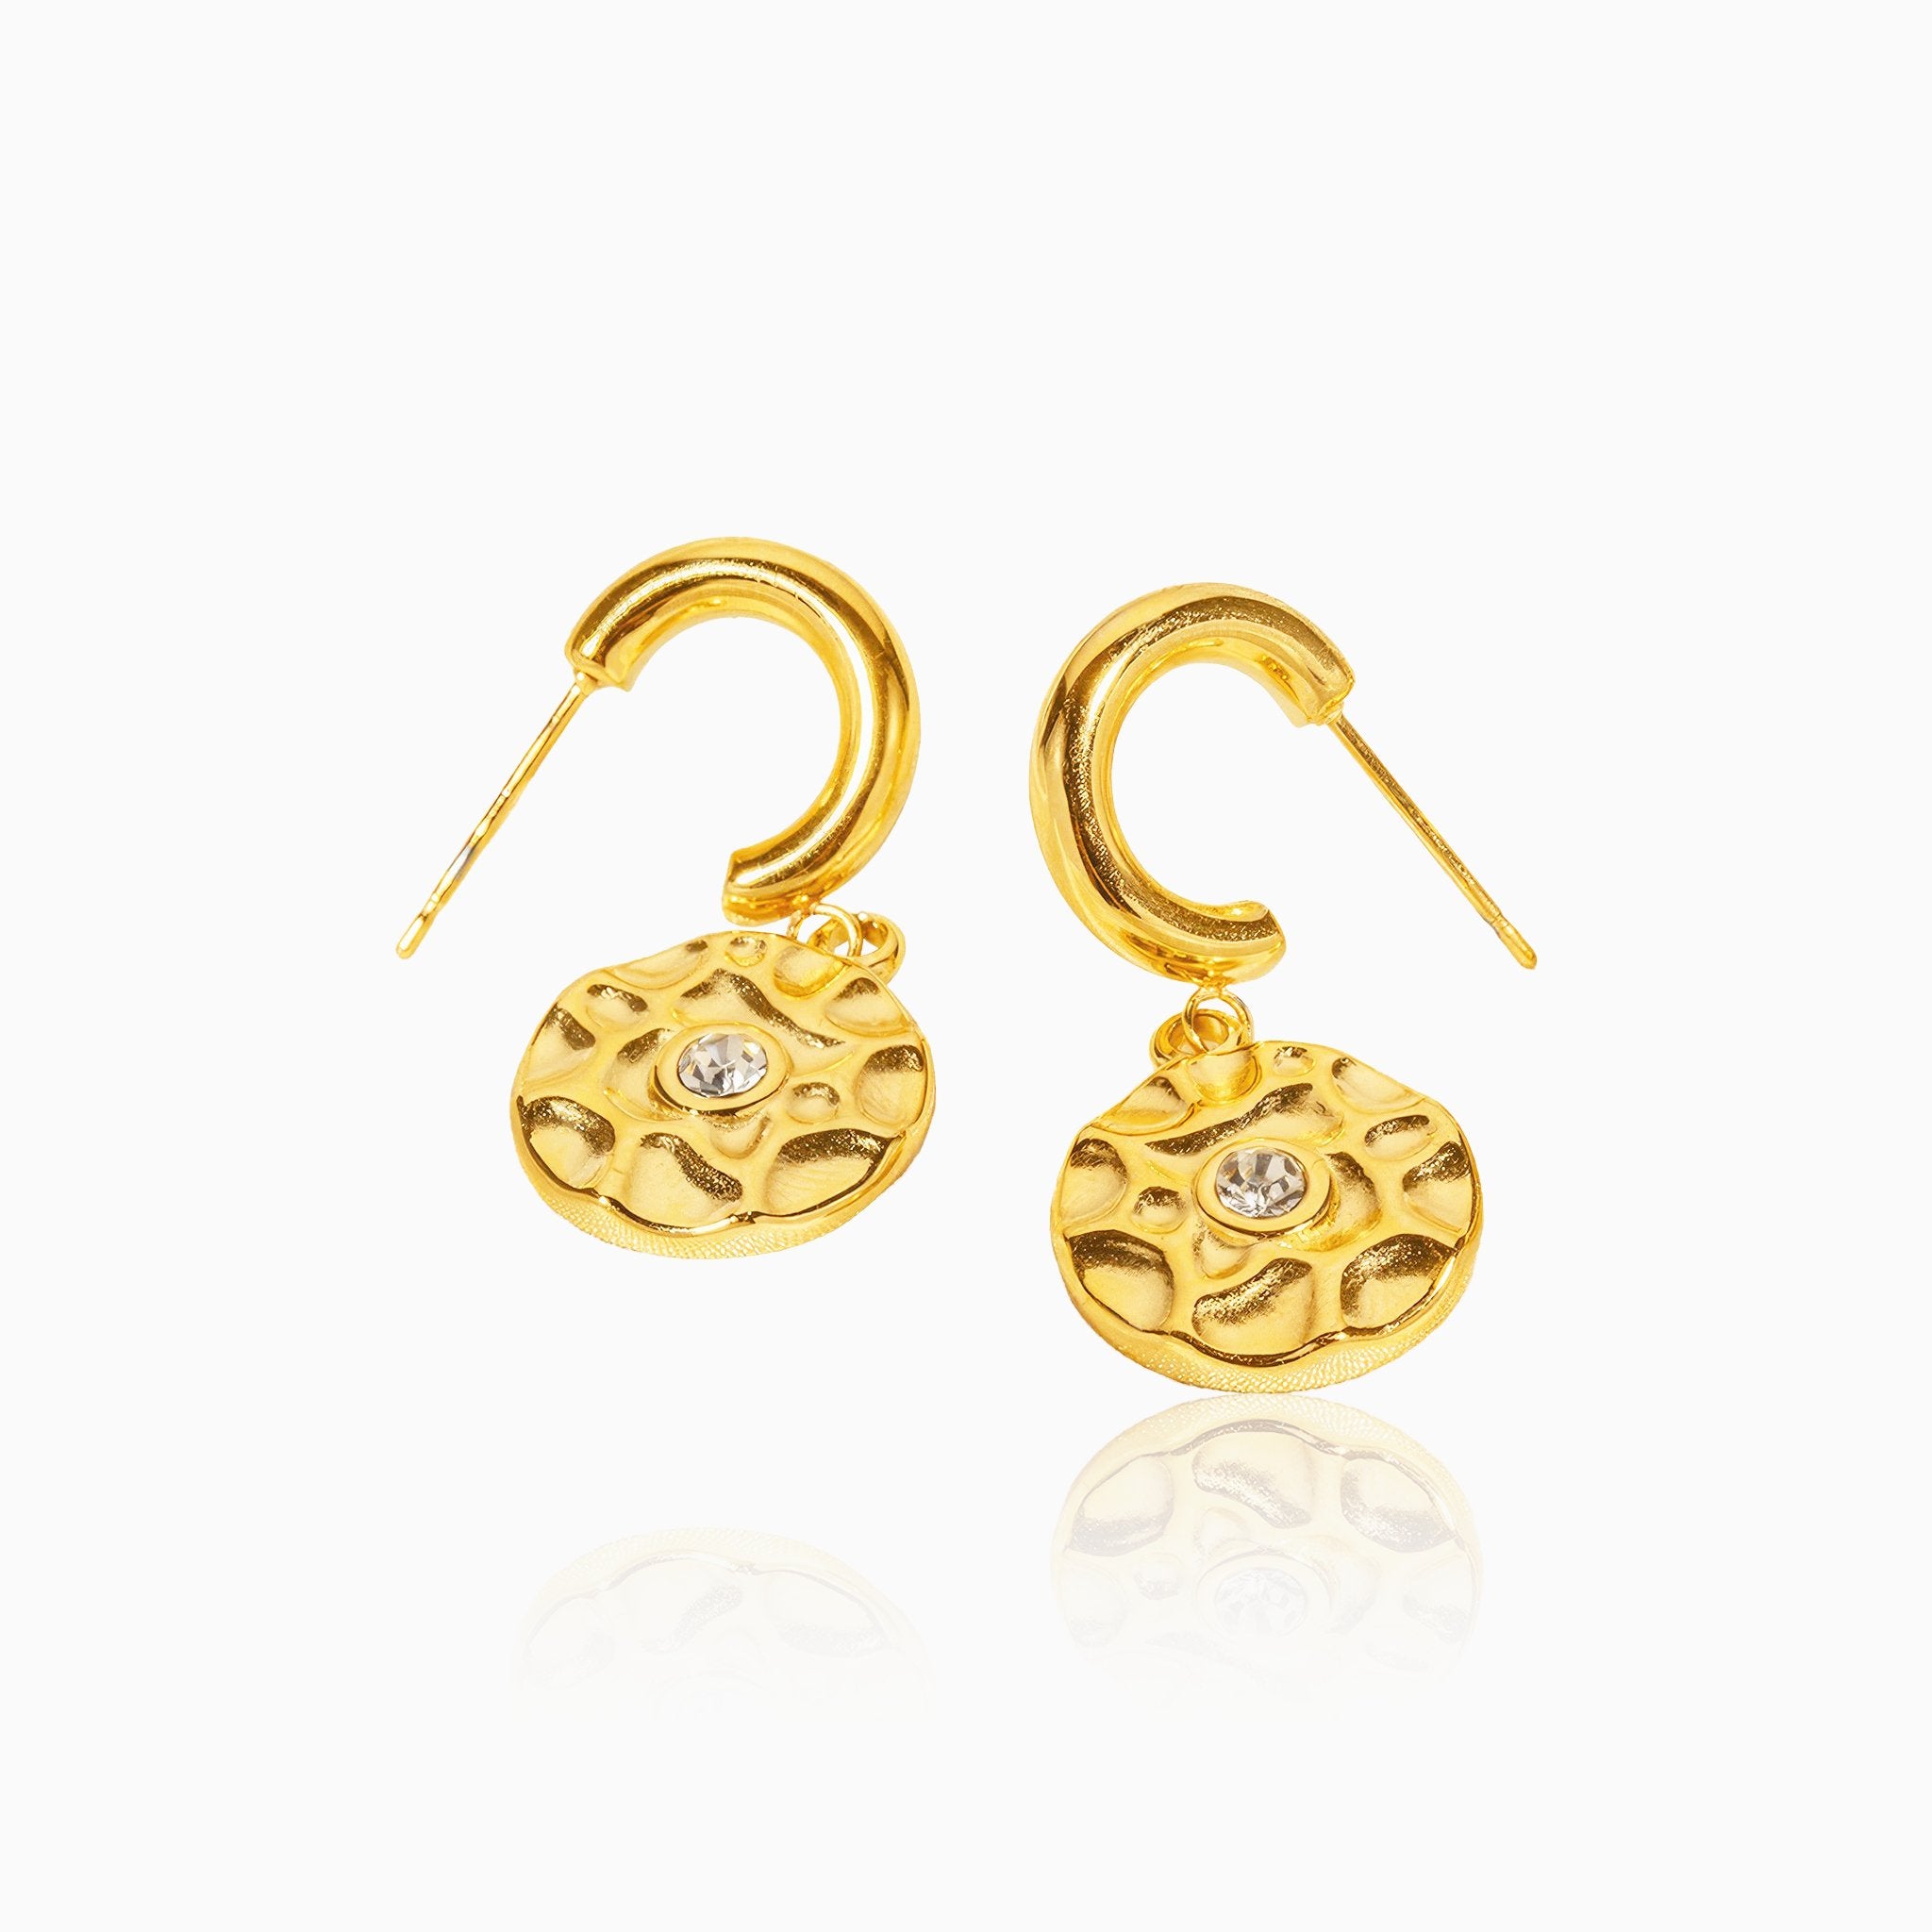 Geometric Diamond Circle Earrings - Nobbier - Earrings - 18K Gold And Titanium PVD Coated Jewelry